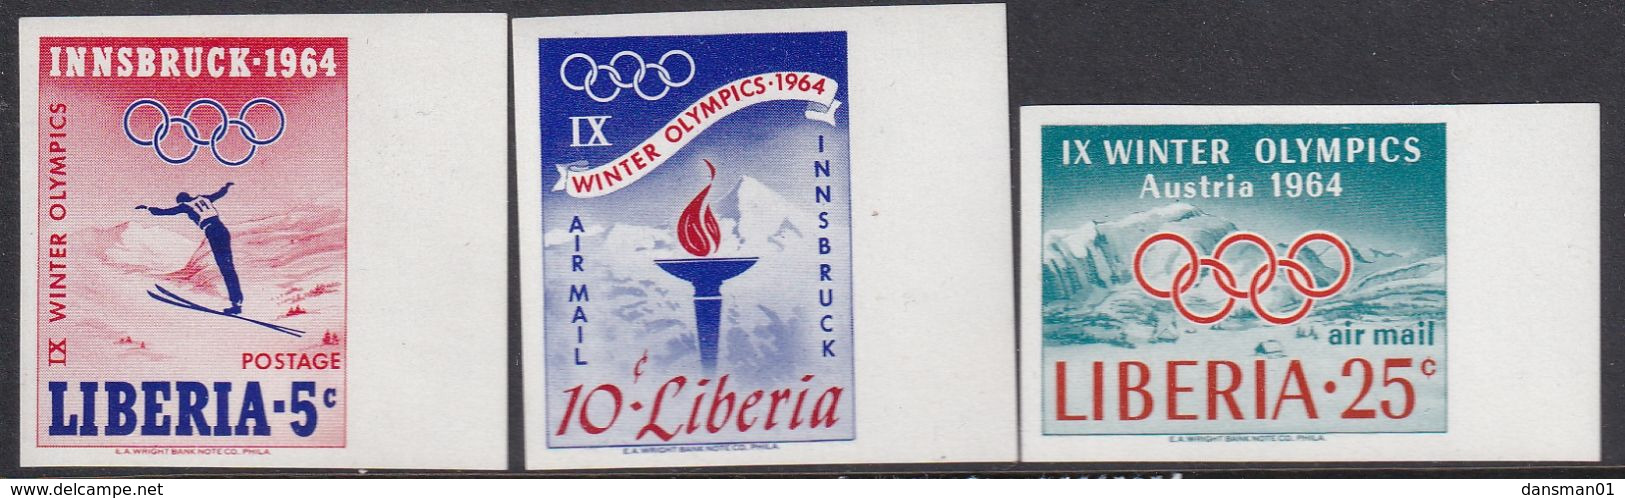 Liberia 1964 Winter Olympics Sc 413, C157-58 Mint Never Hinged - Liberia